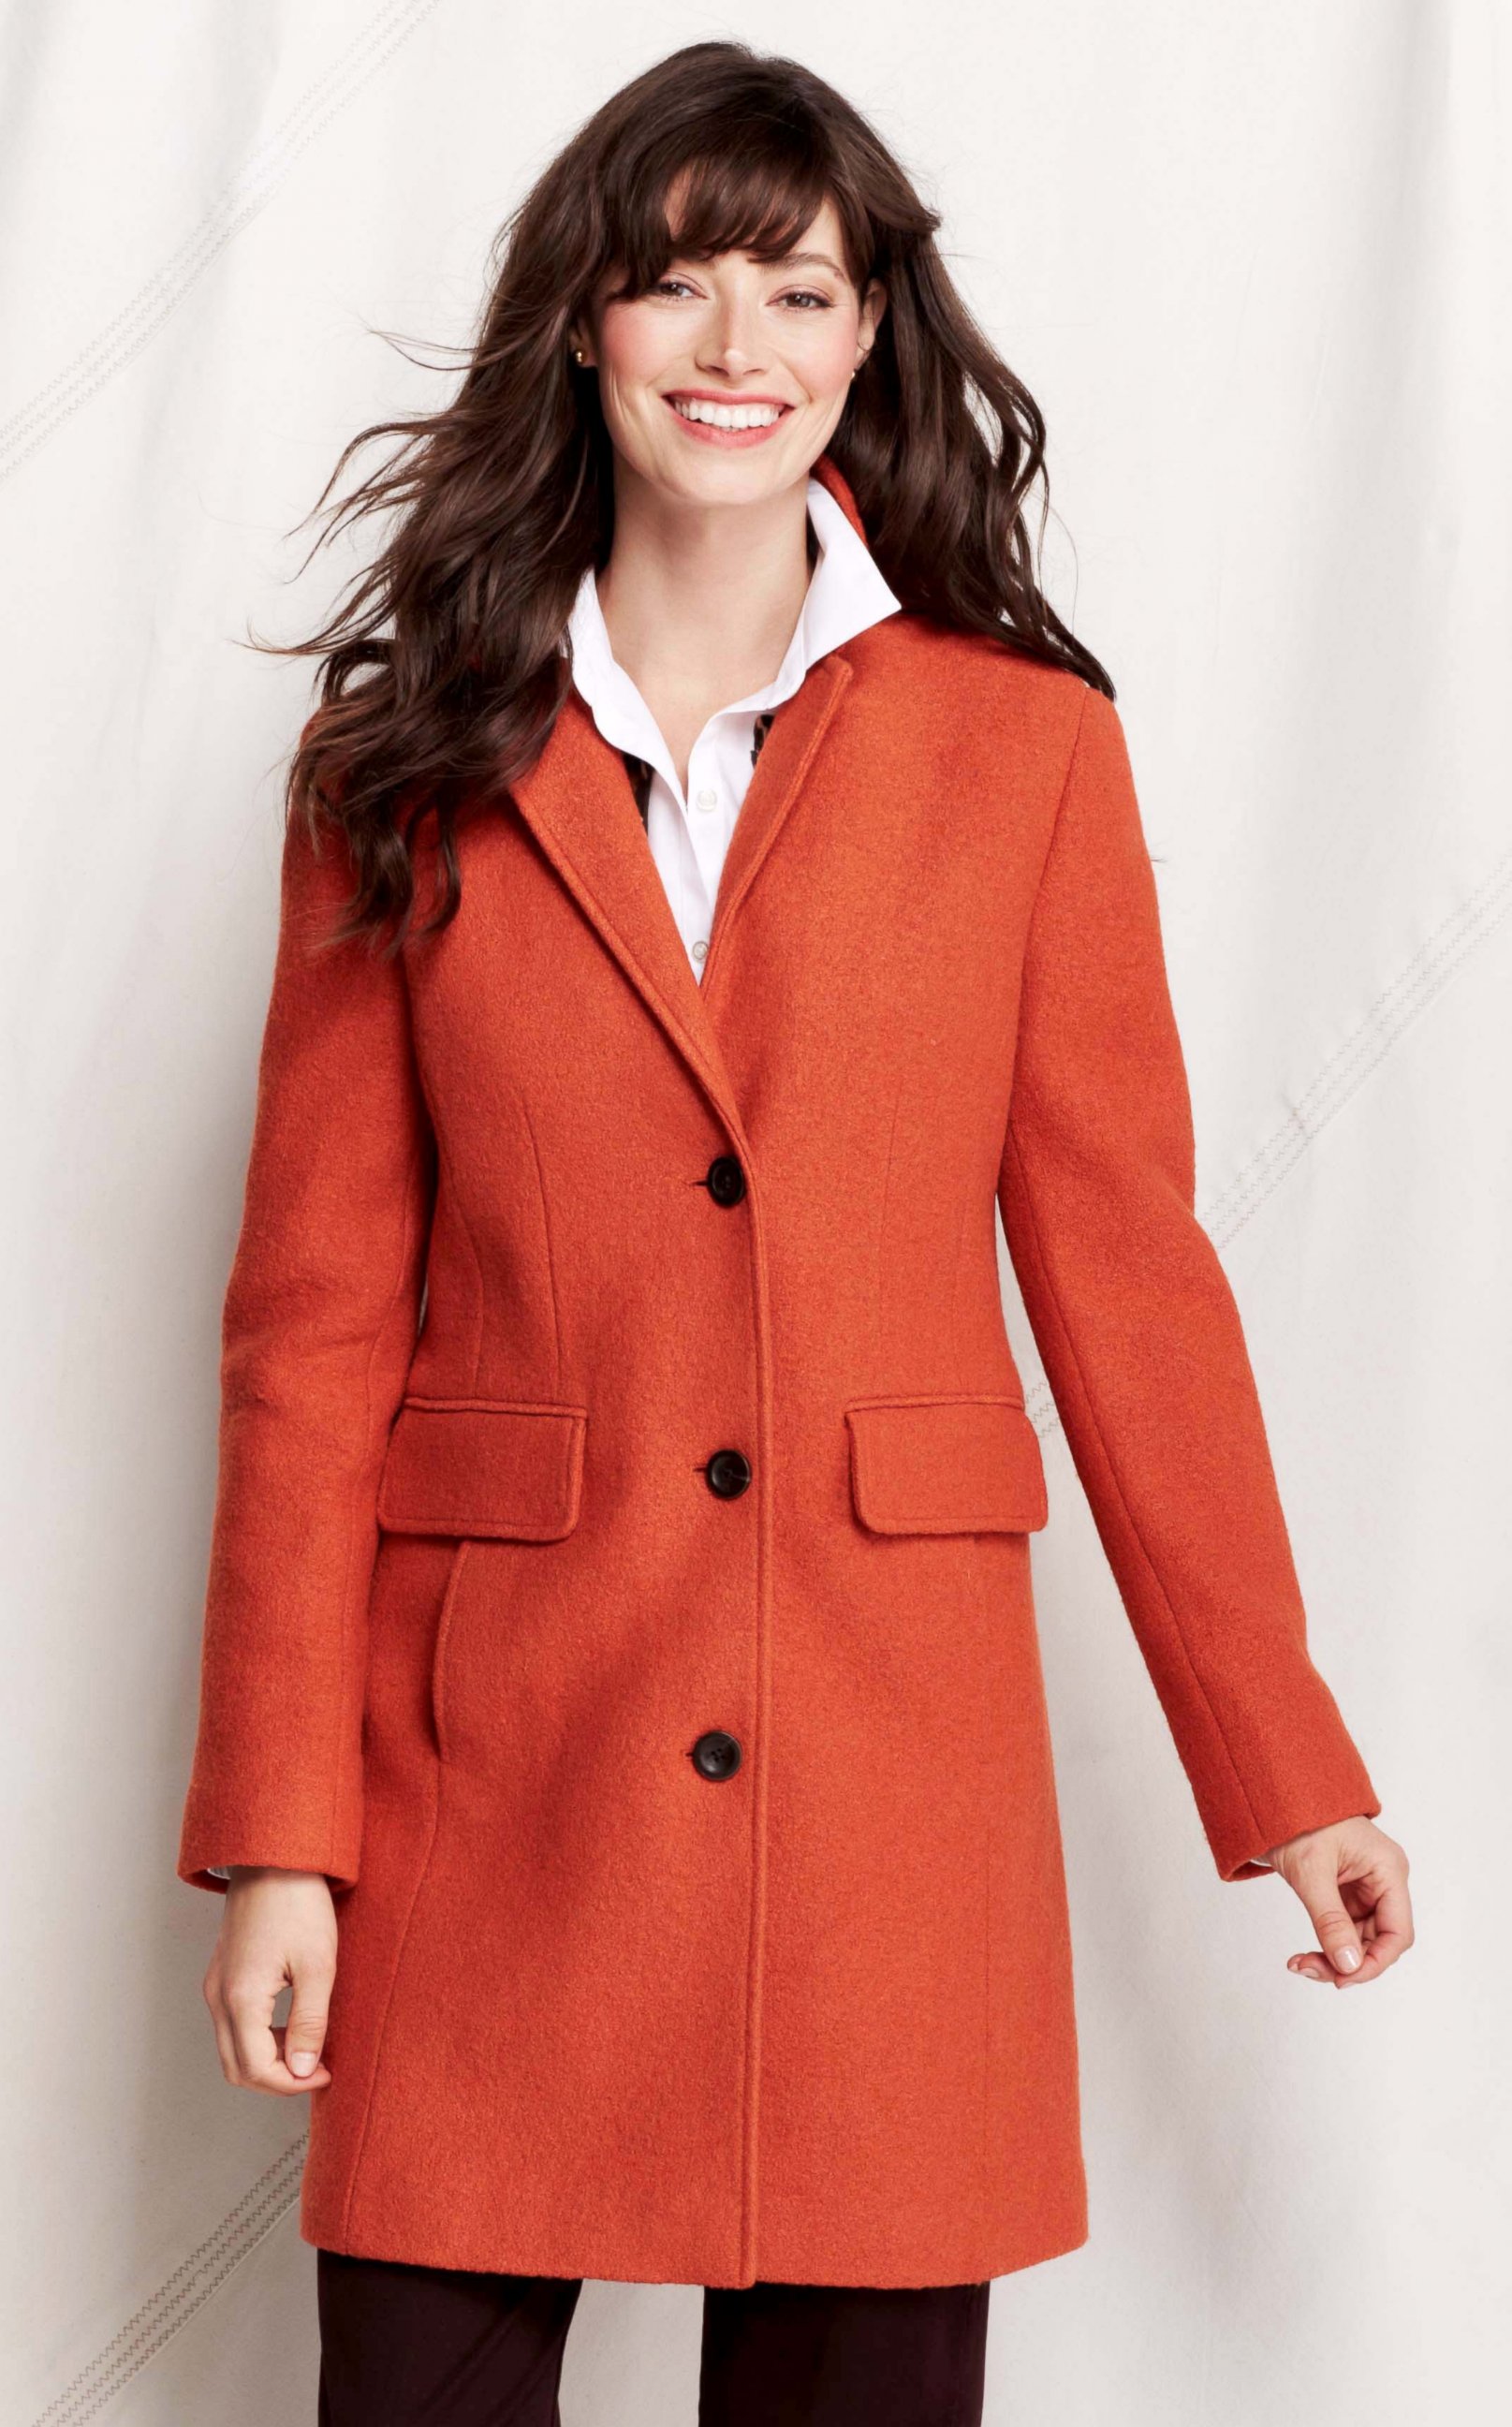 PHOTO: Fashion Trend: Orange Hues